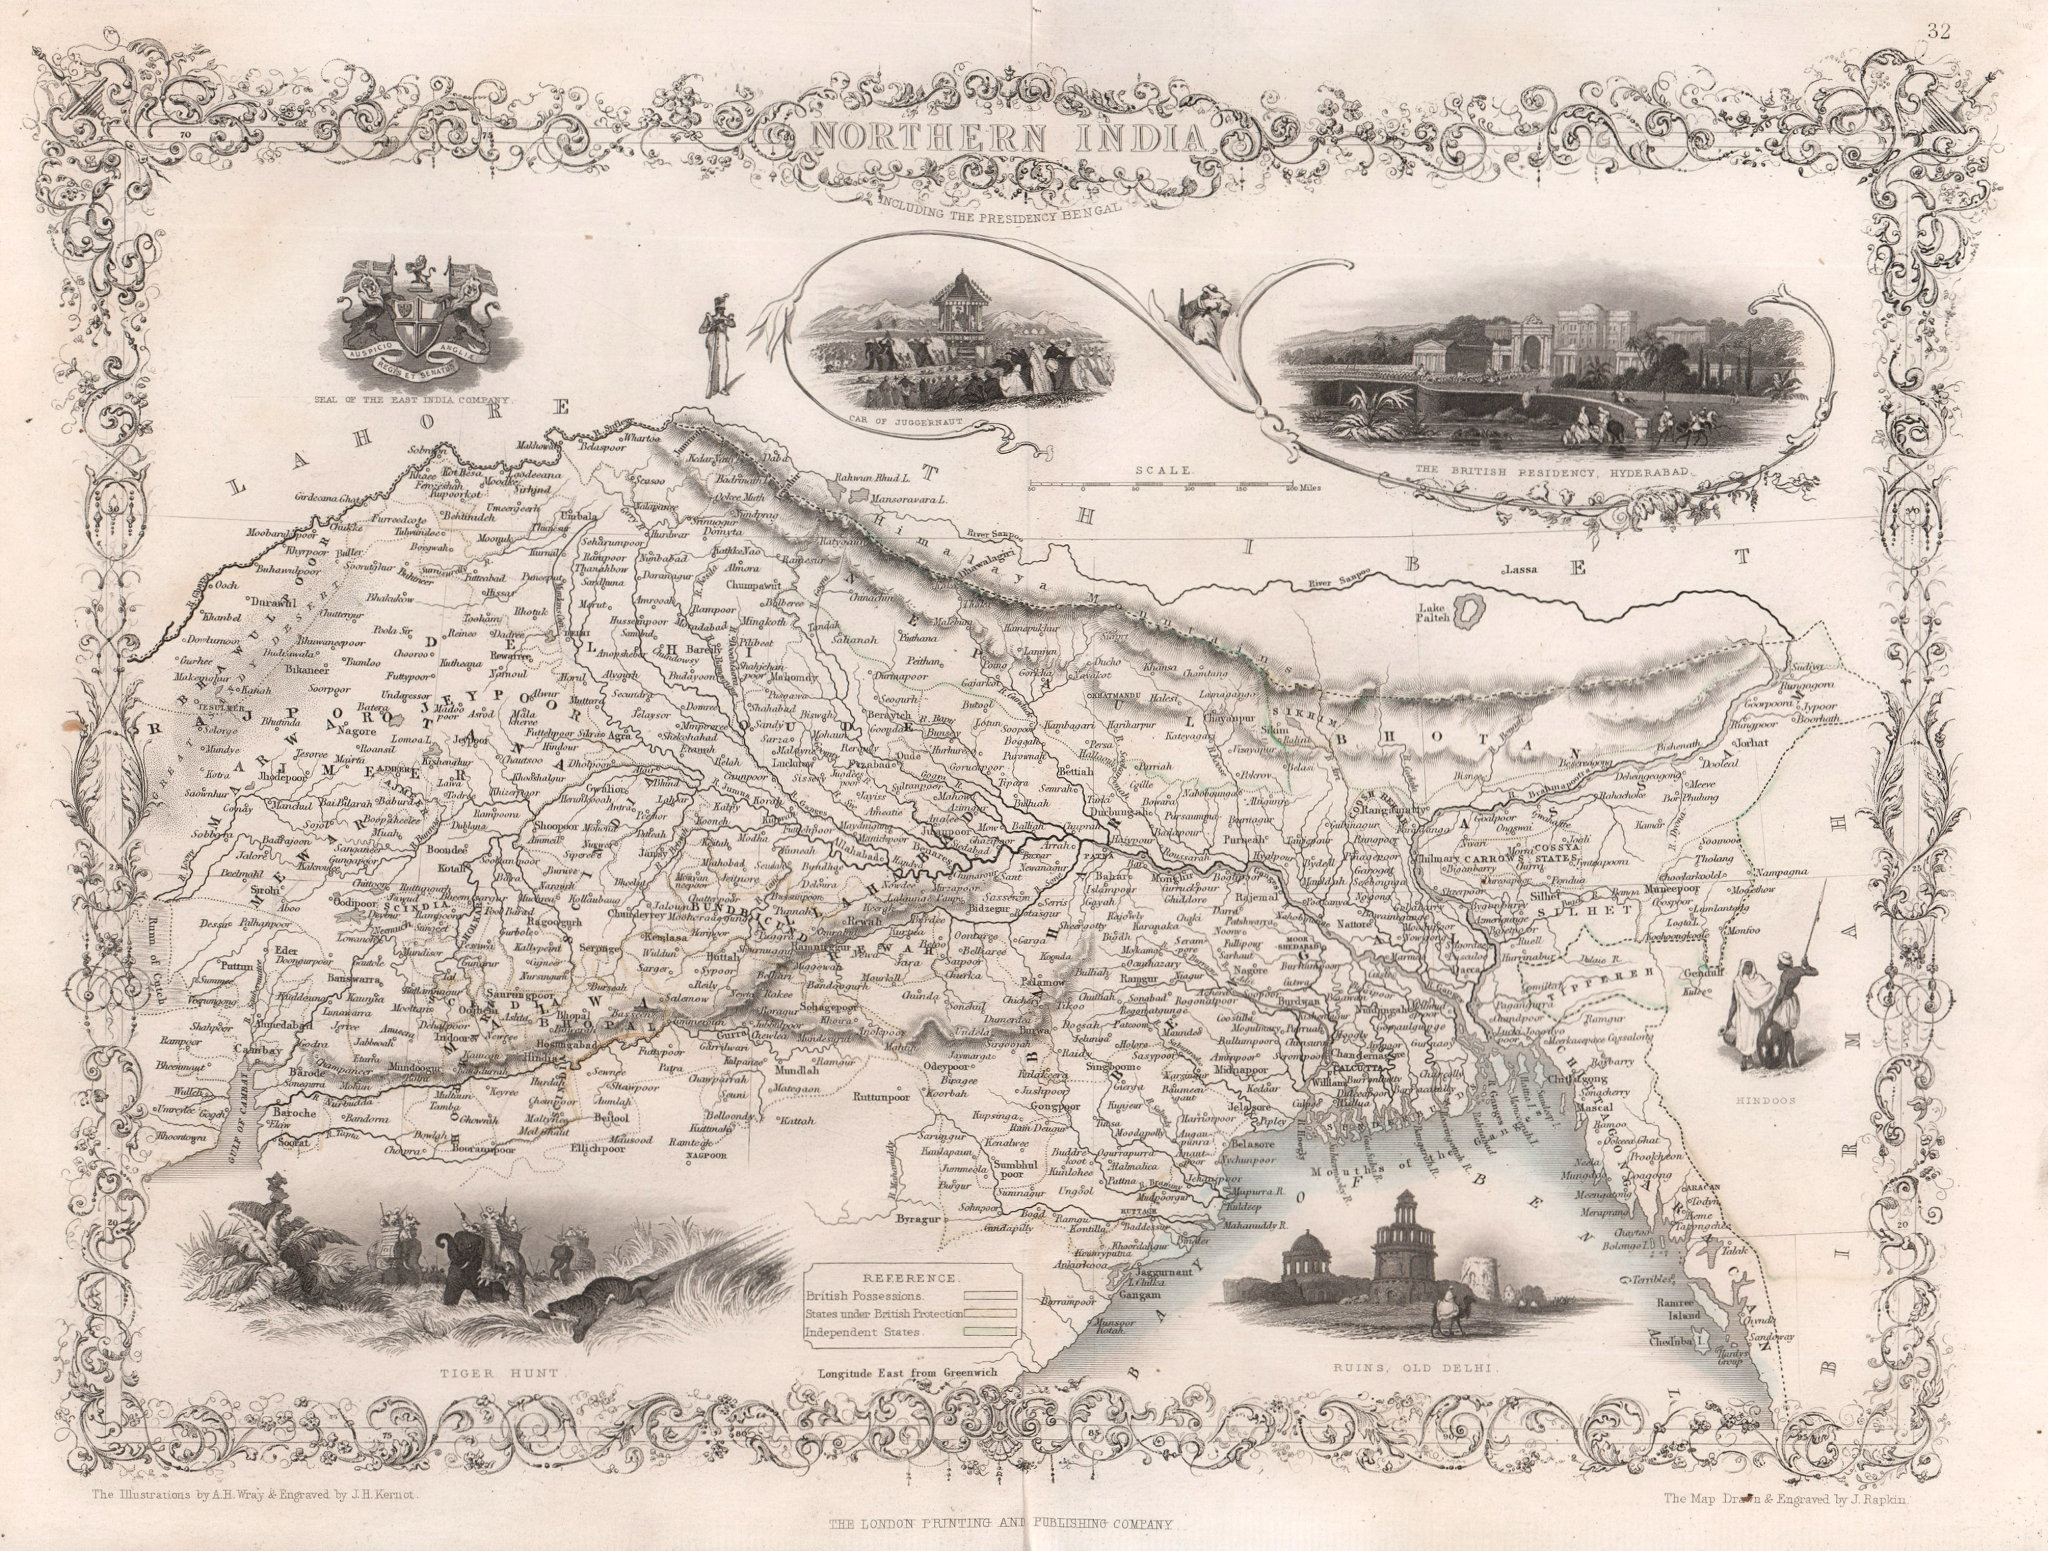 Associate Product NORTHERN INDIA. British colonies. Nepal Bhutan Bengal. TALLIS/RAPKIN c1855 map